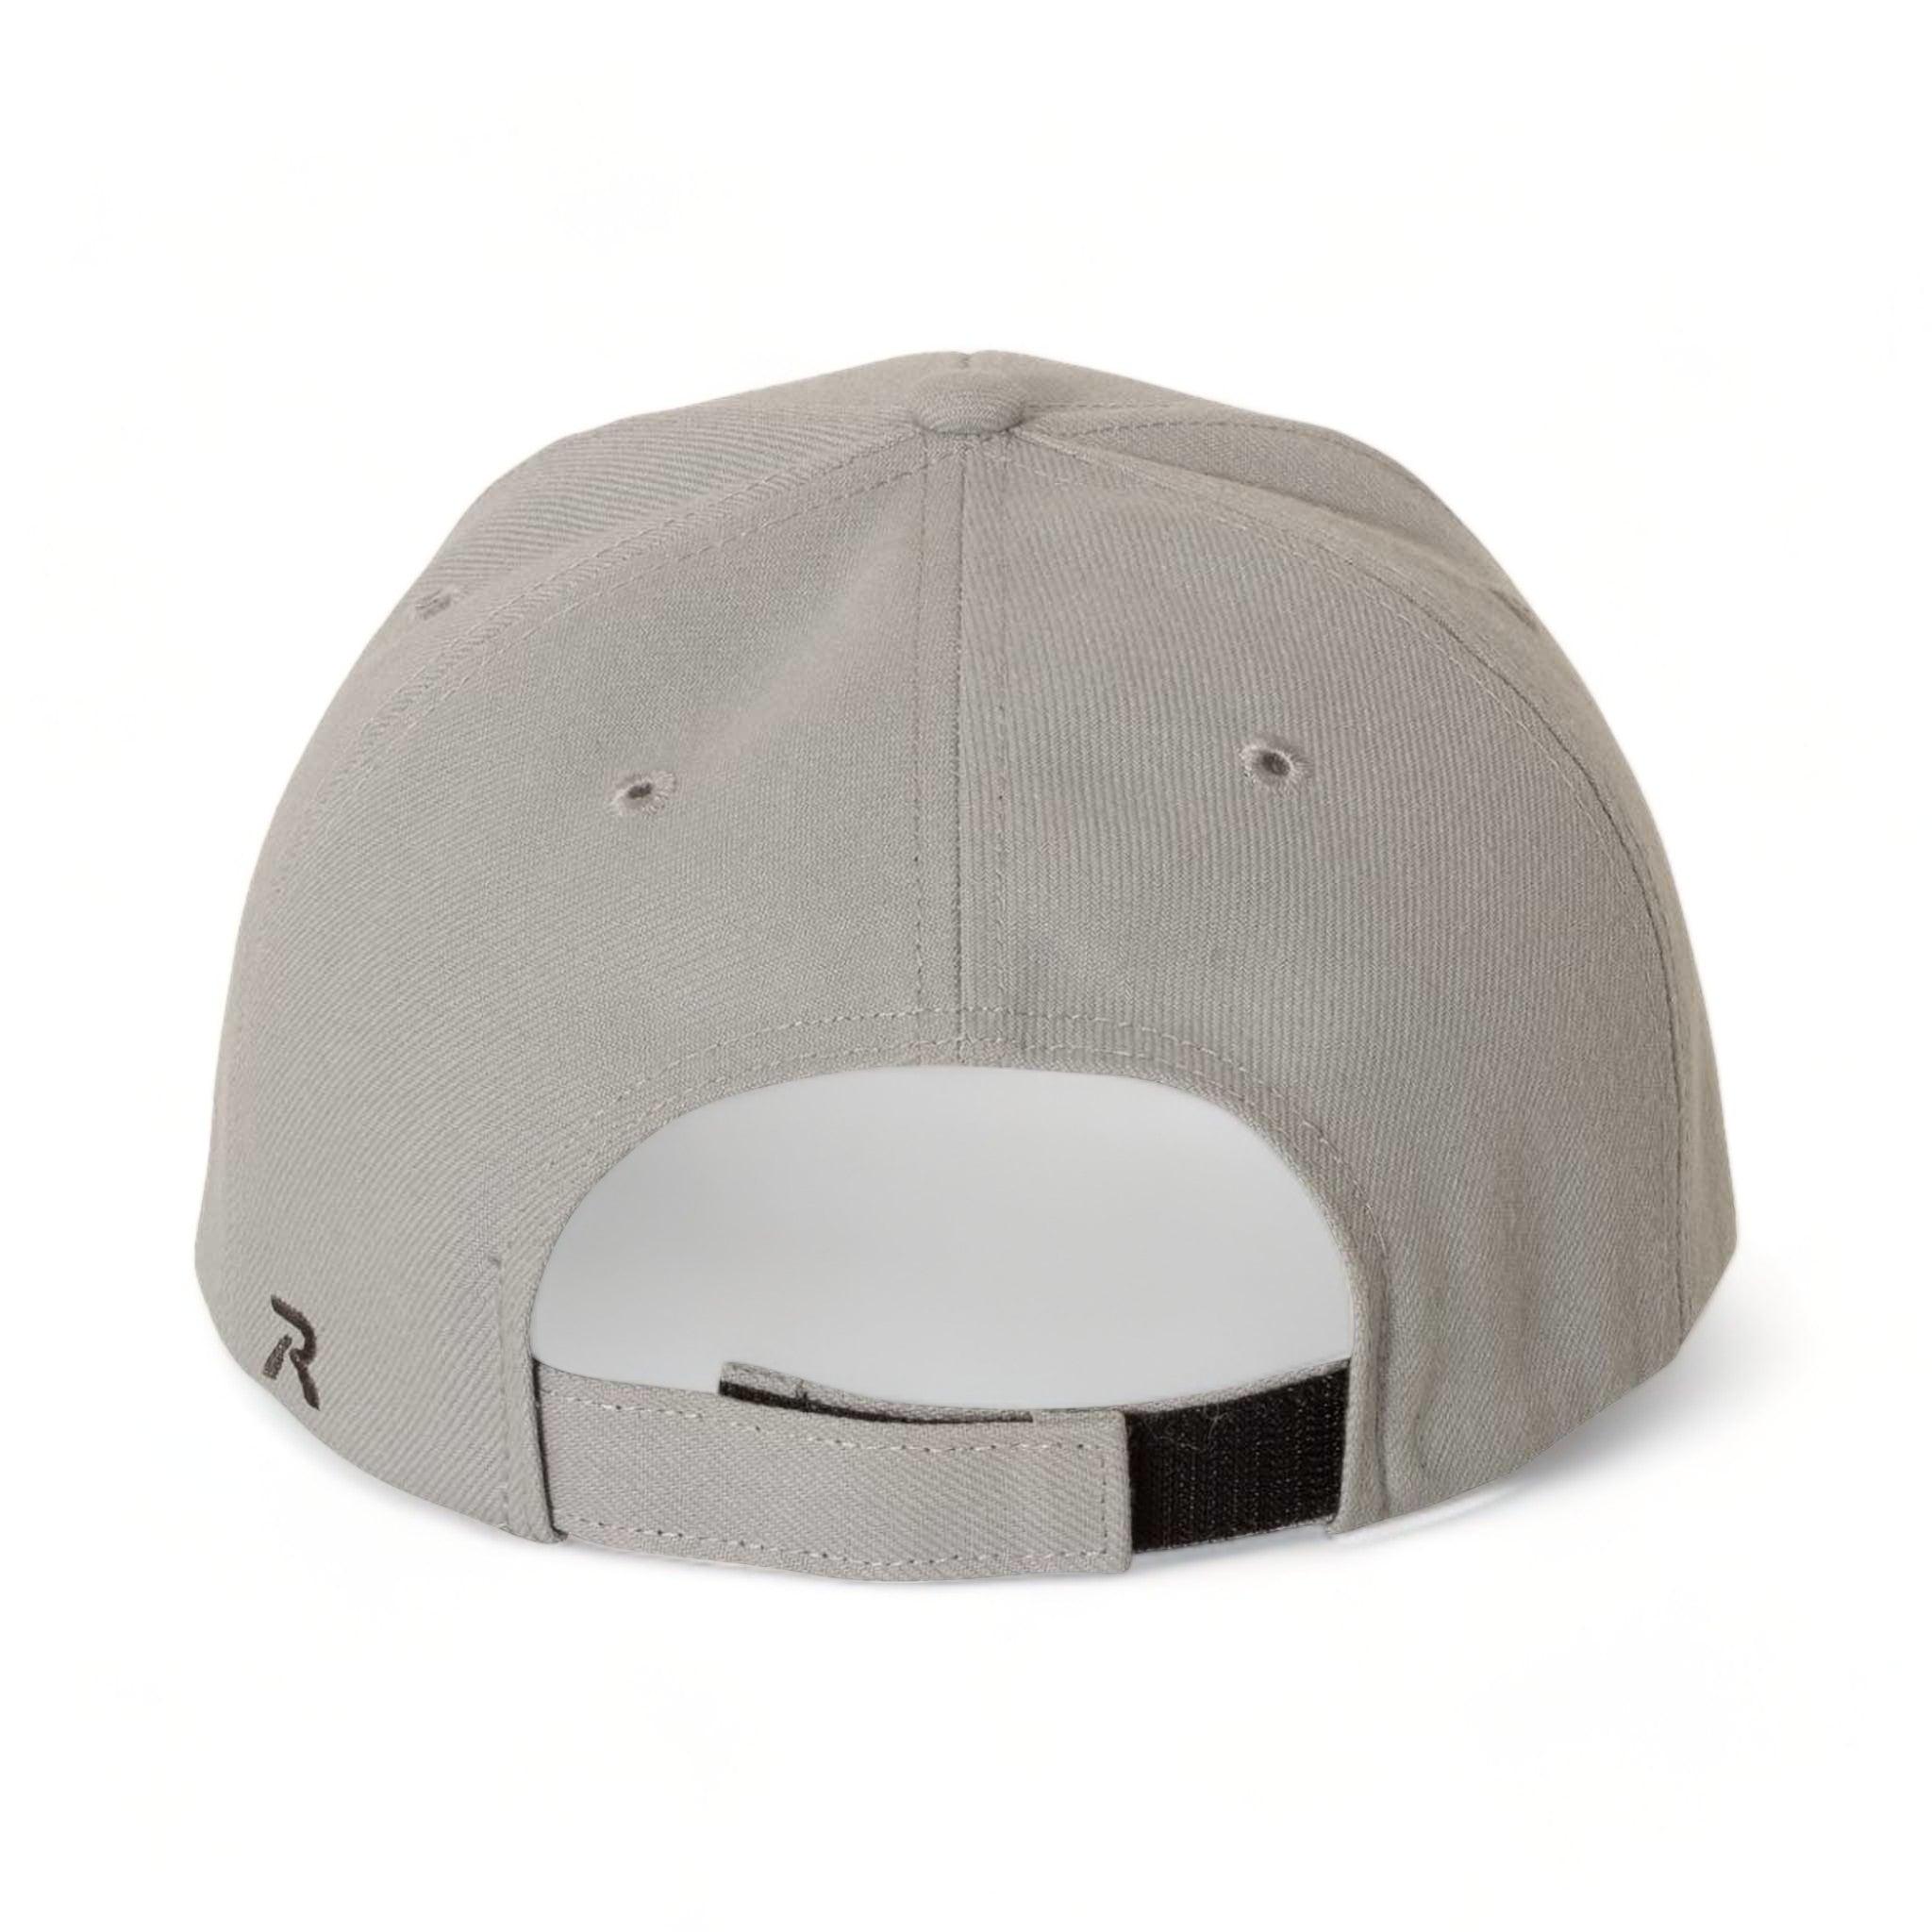 Back view of Richardson 514 custom hat in grey